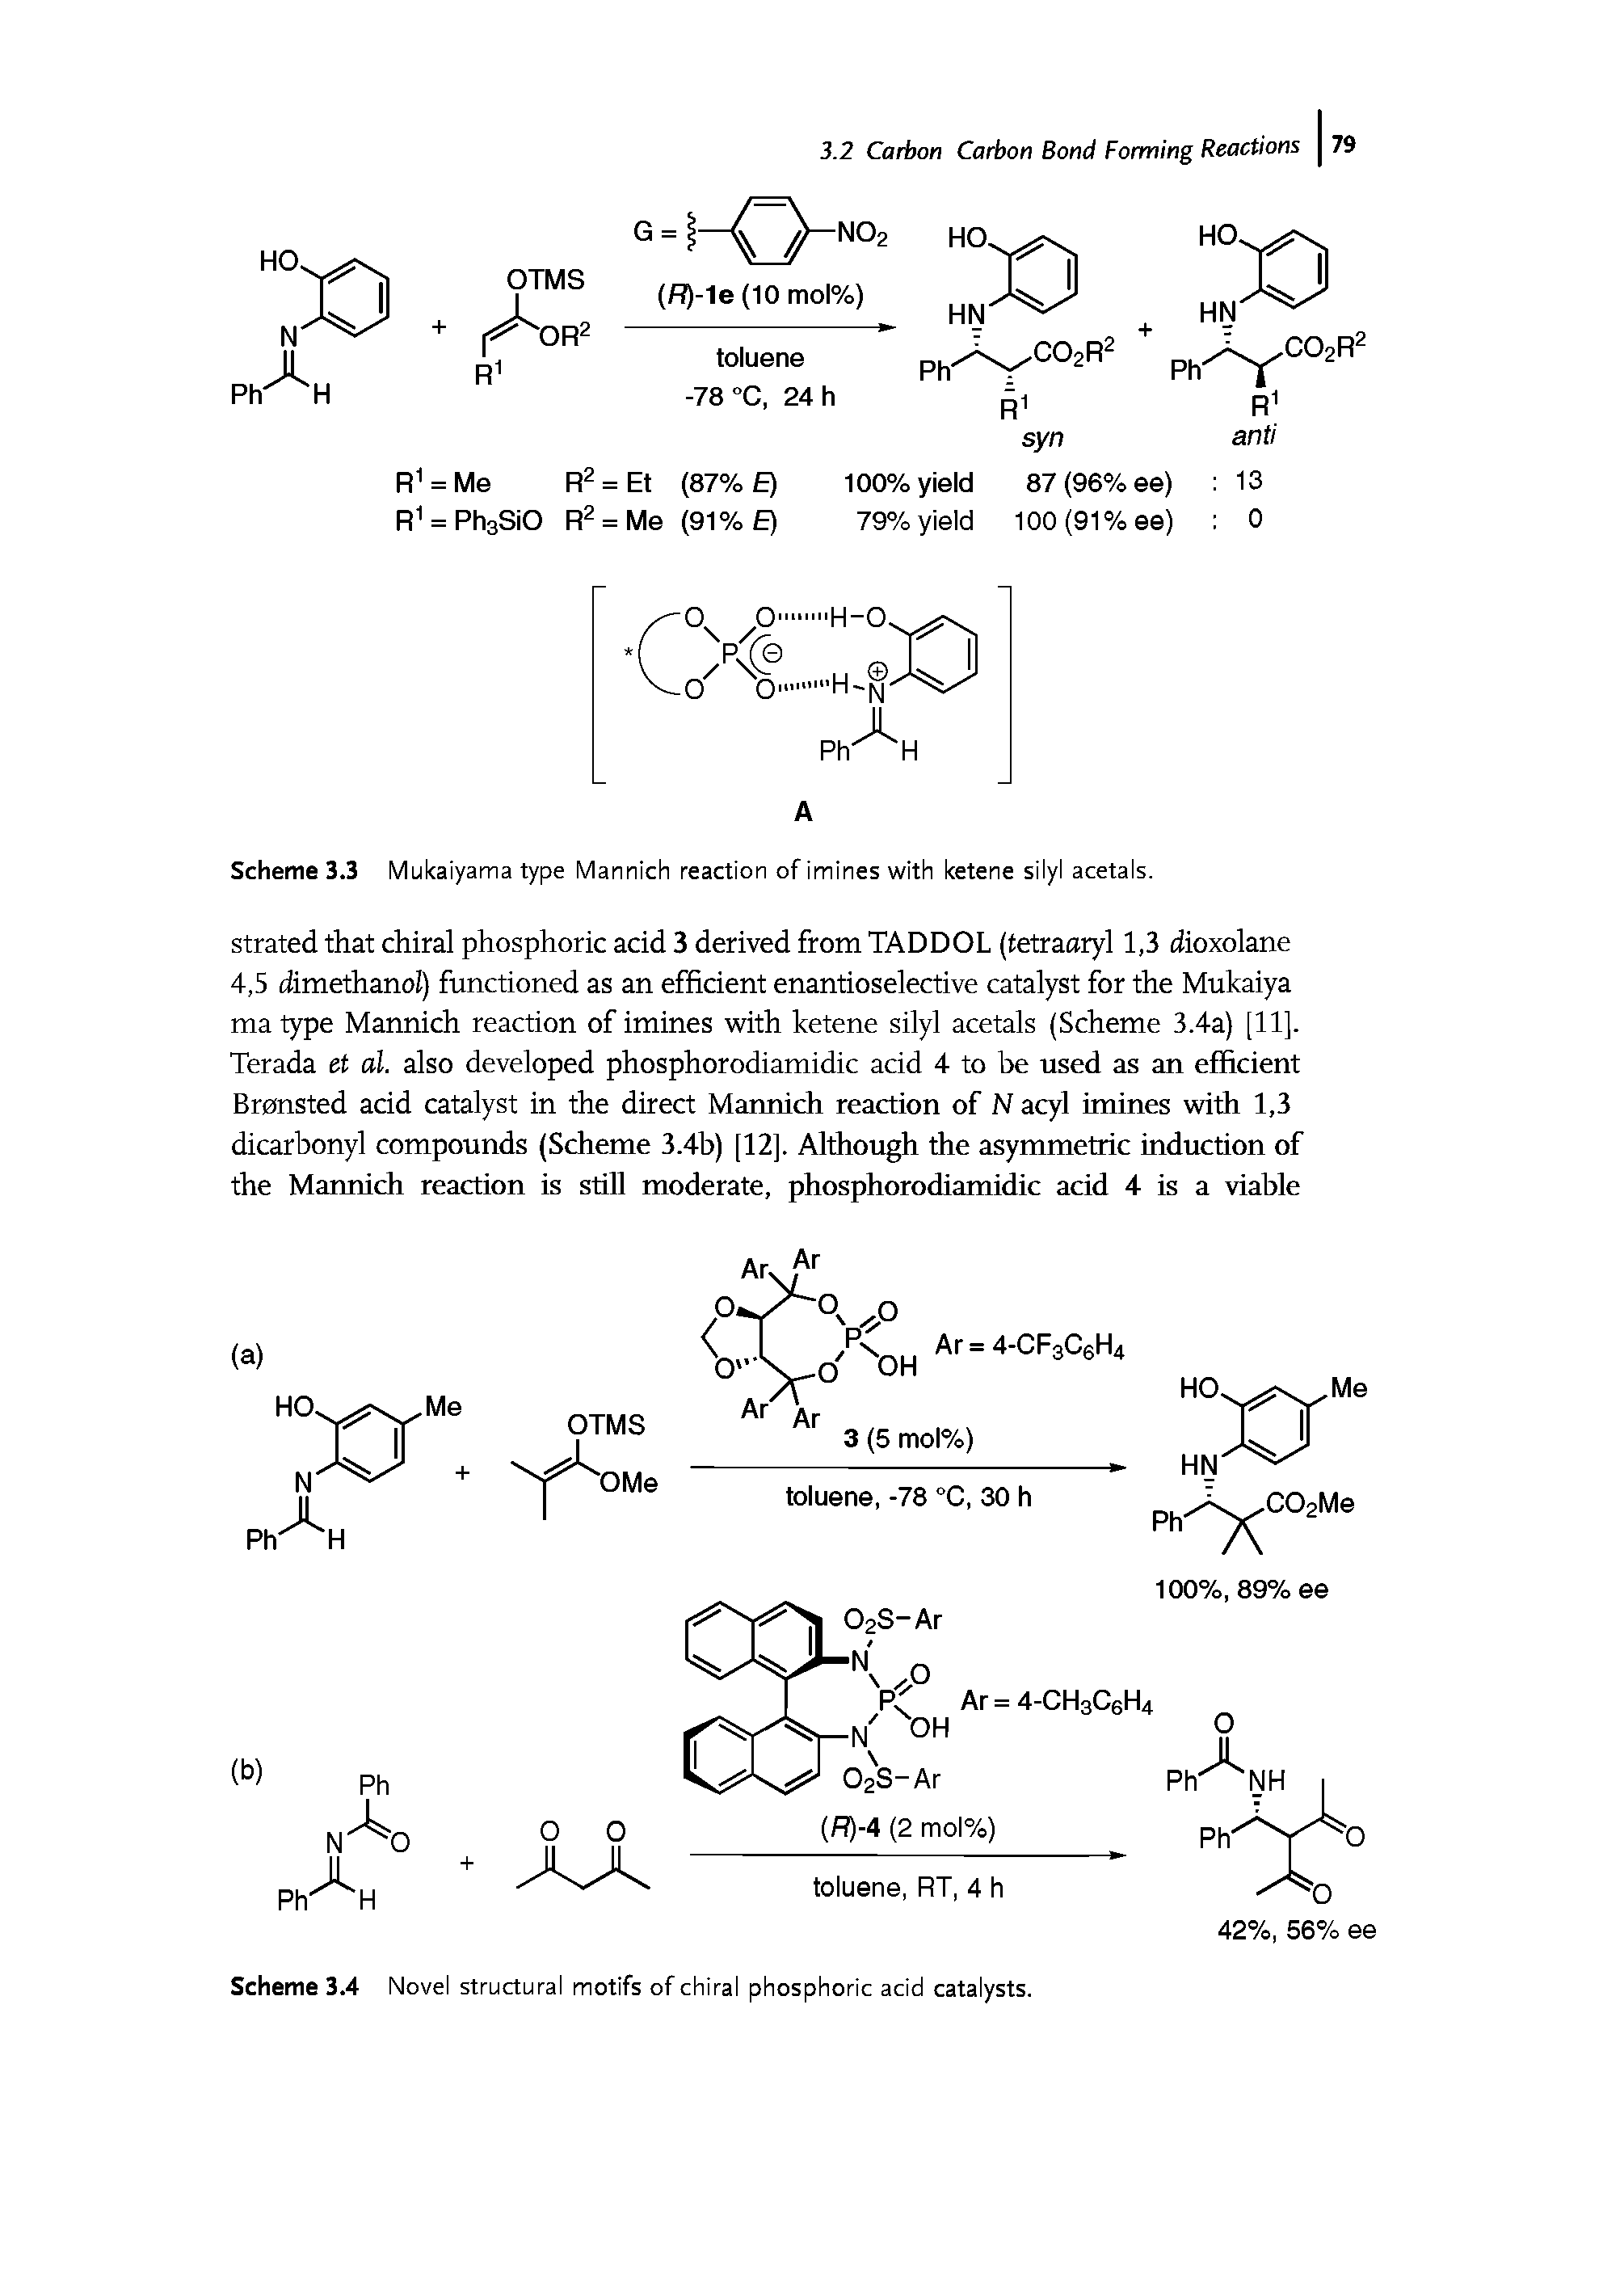 Scheme 3.4 Novel structural motifs of chiral phosphoric acid catalysts.